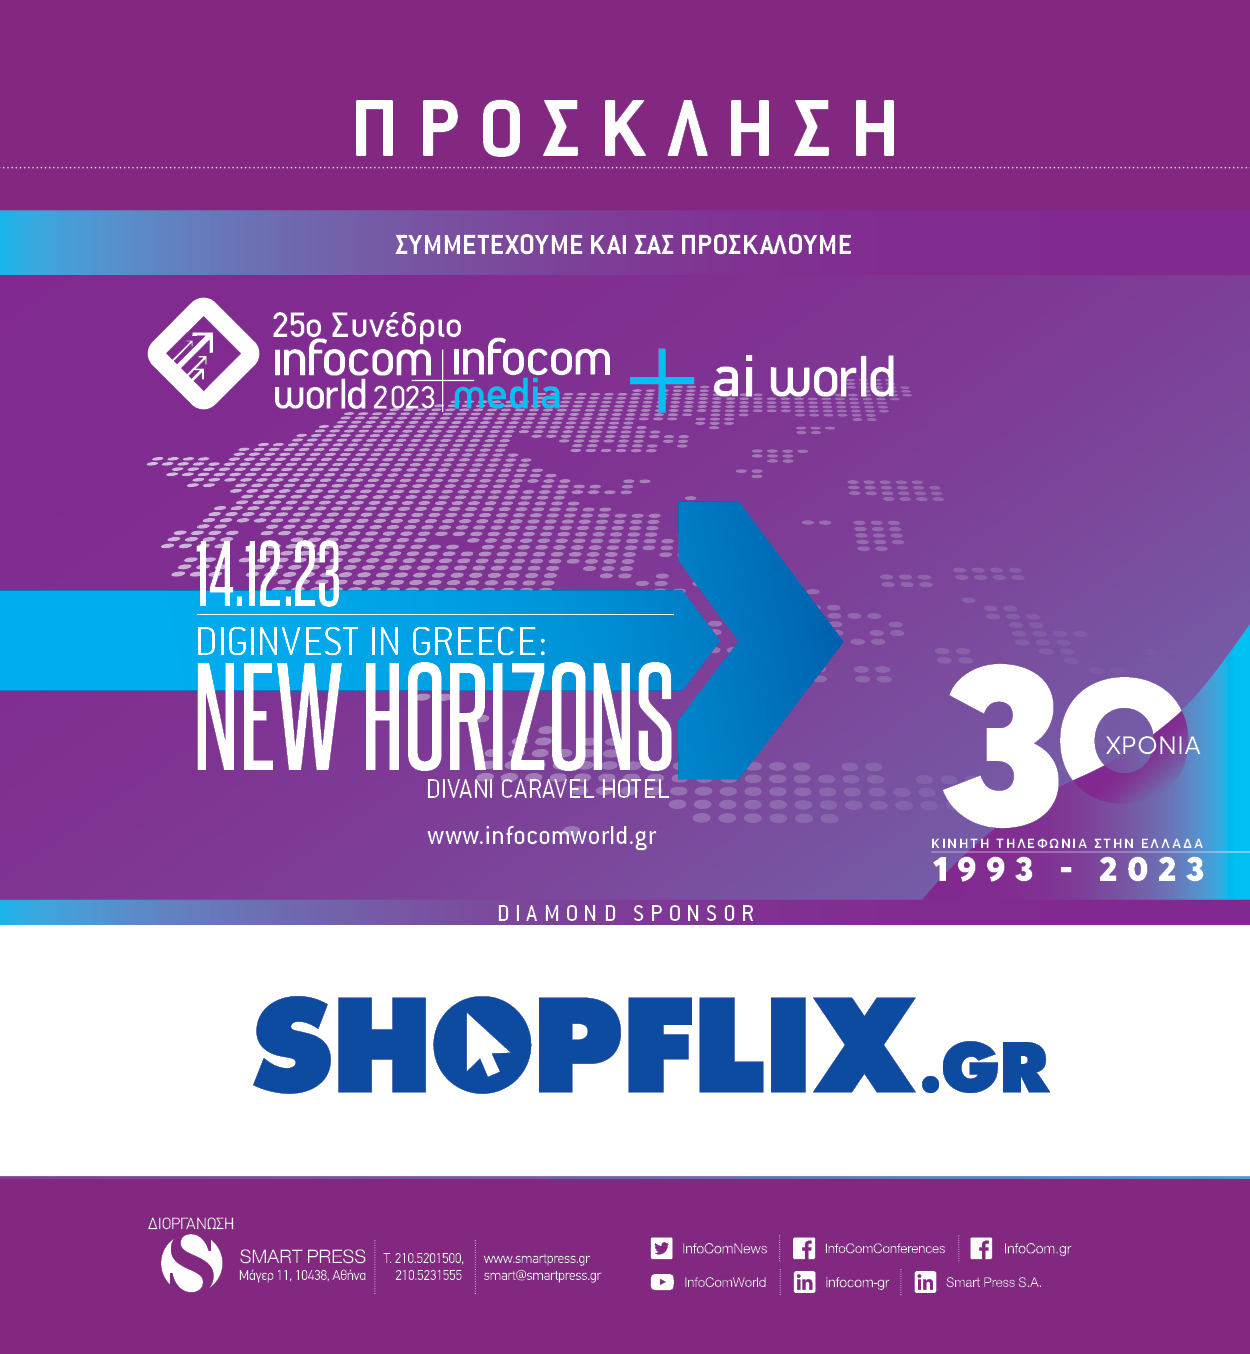 25o Συνέδριο Infocom World 2023. Diginvest in Greece: New Horizons!